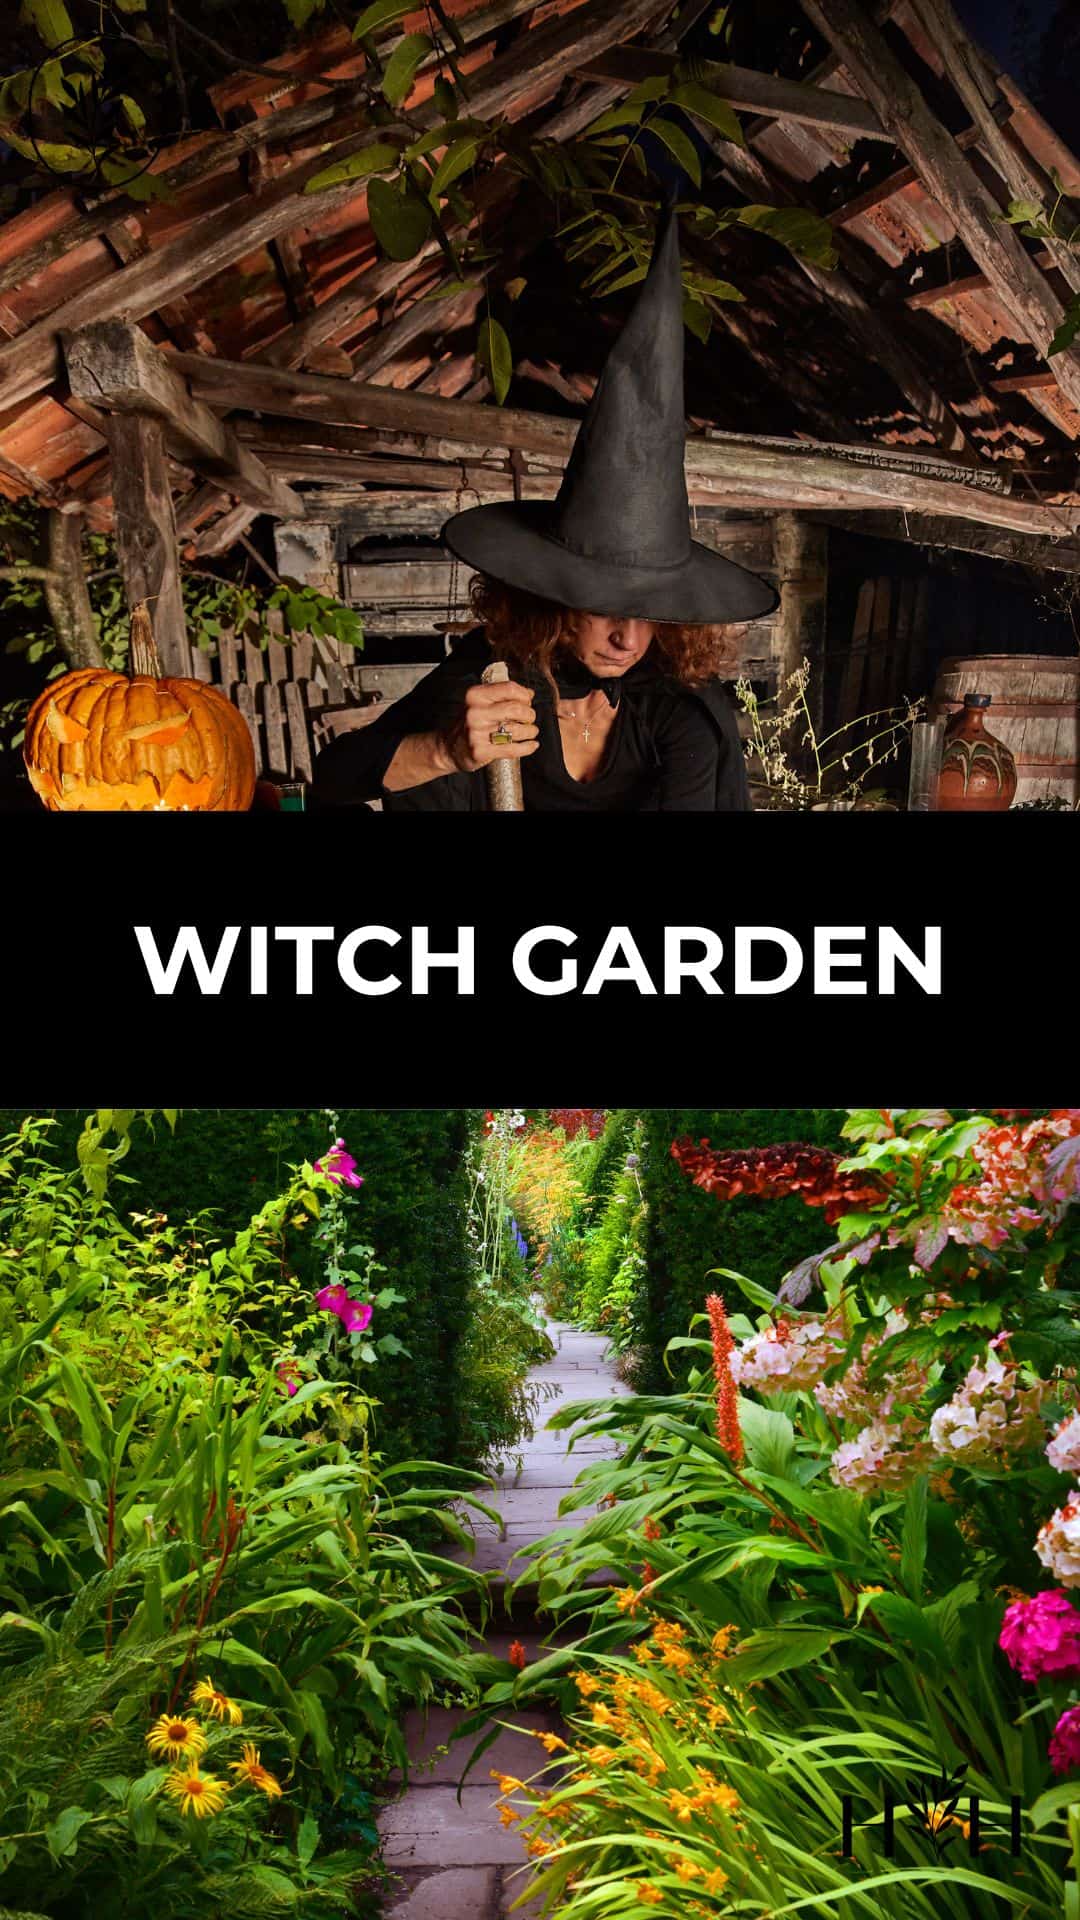 Witch garden via @home4theharvest